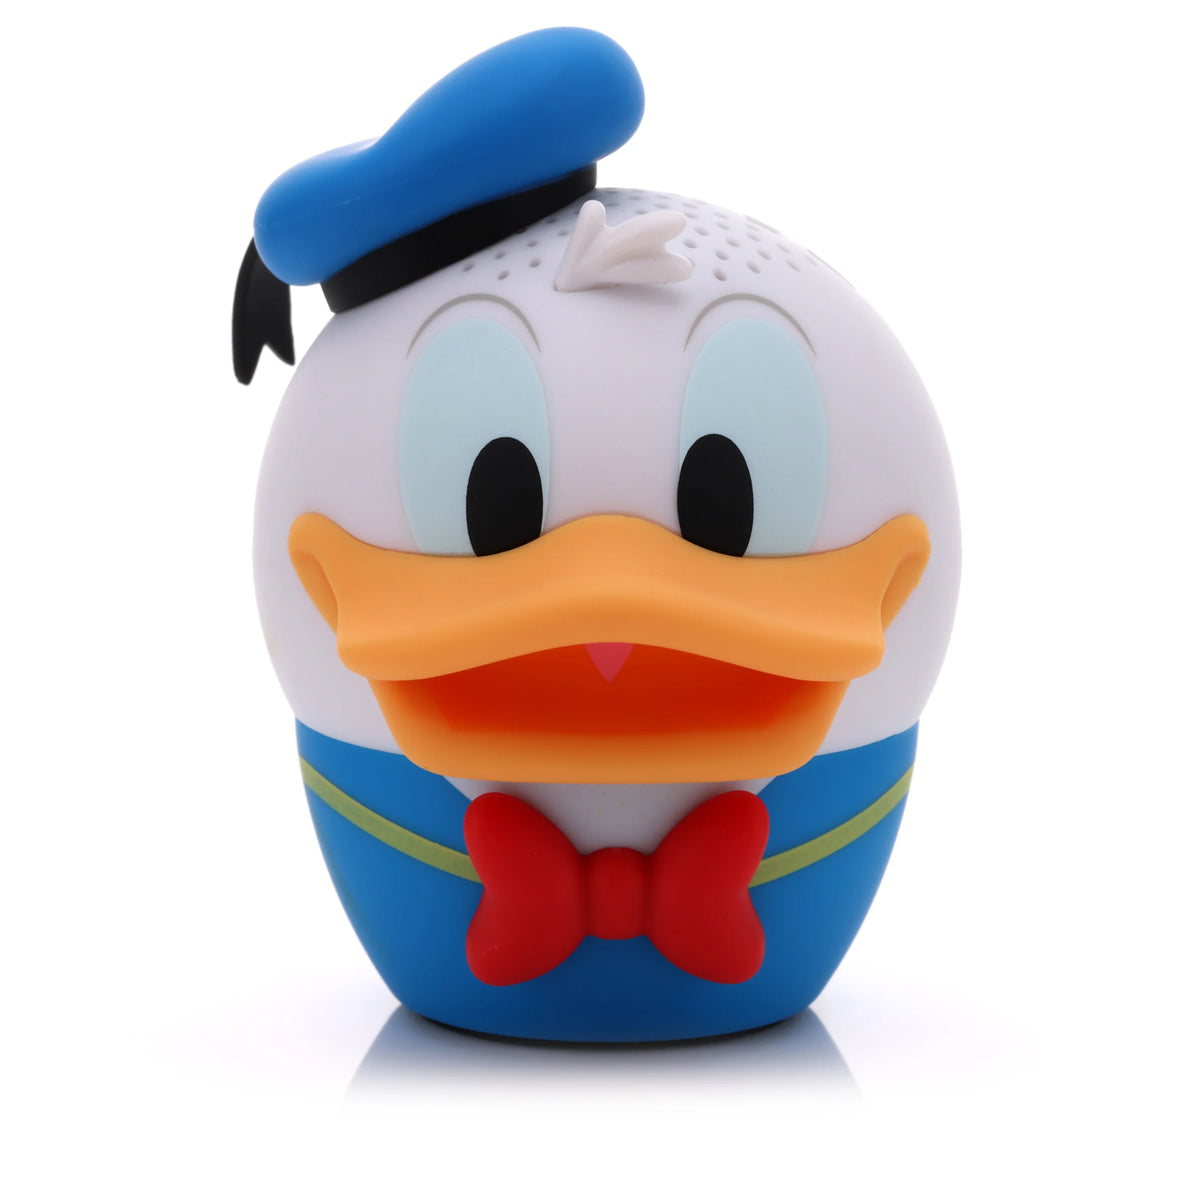 Disney Sensational Six Donald Duck Wireless Bluetooth Speaker